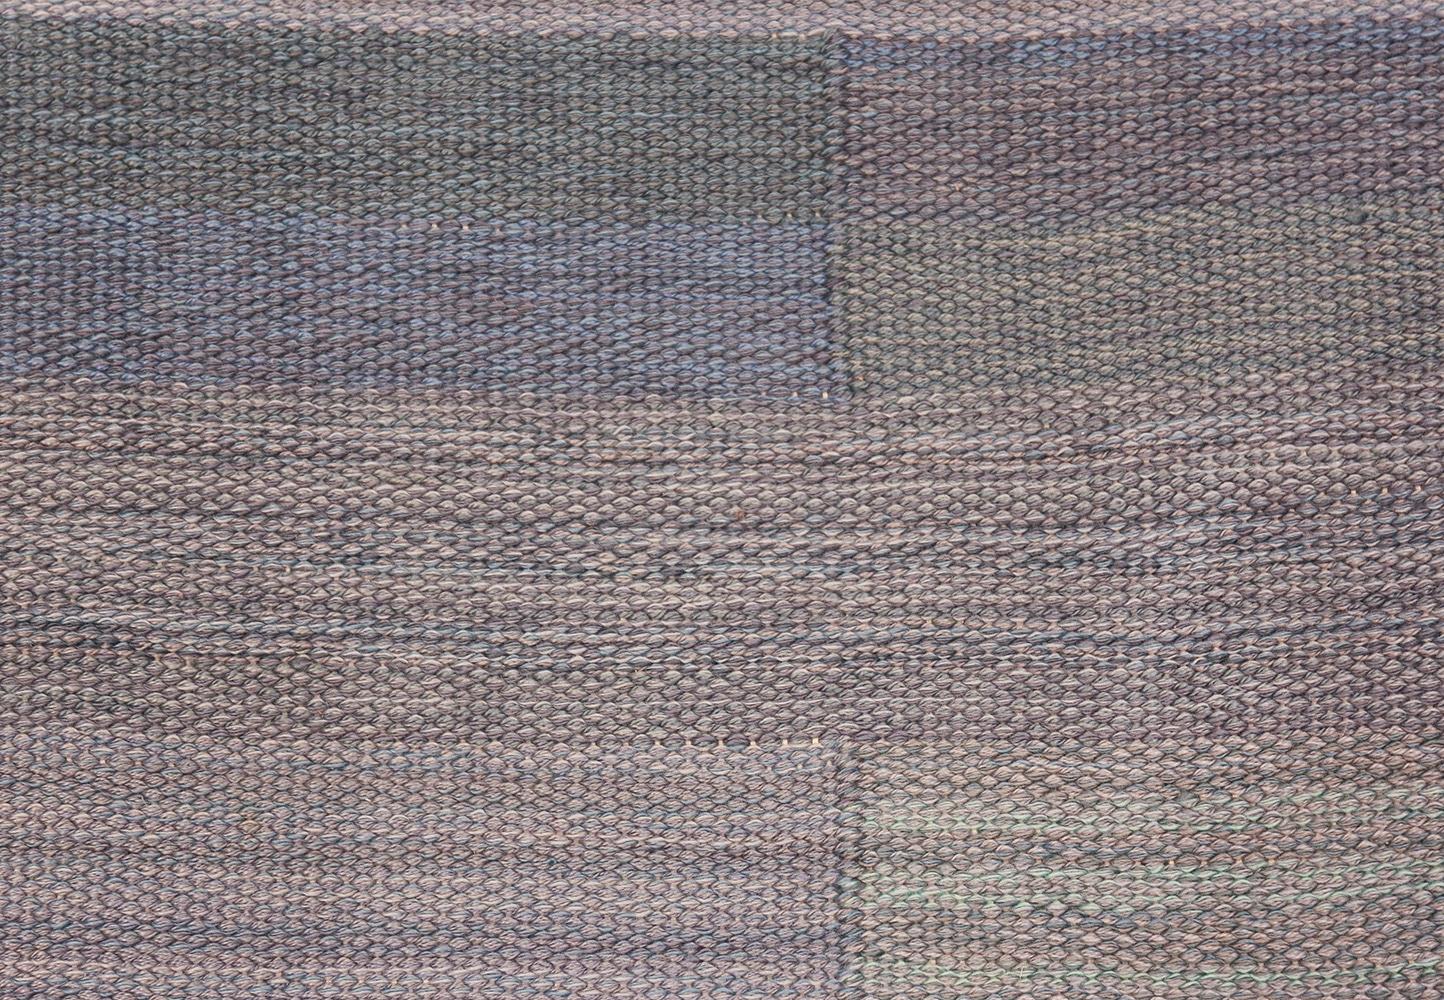 Wool Vintage Swedish Kilim by Marianne Richter for Marta Maas. Size: 7' 4